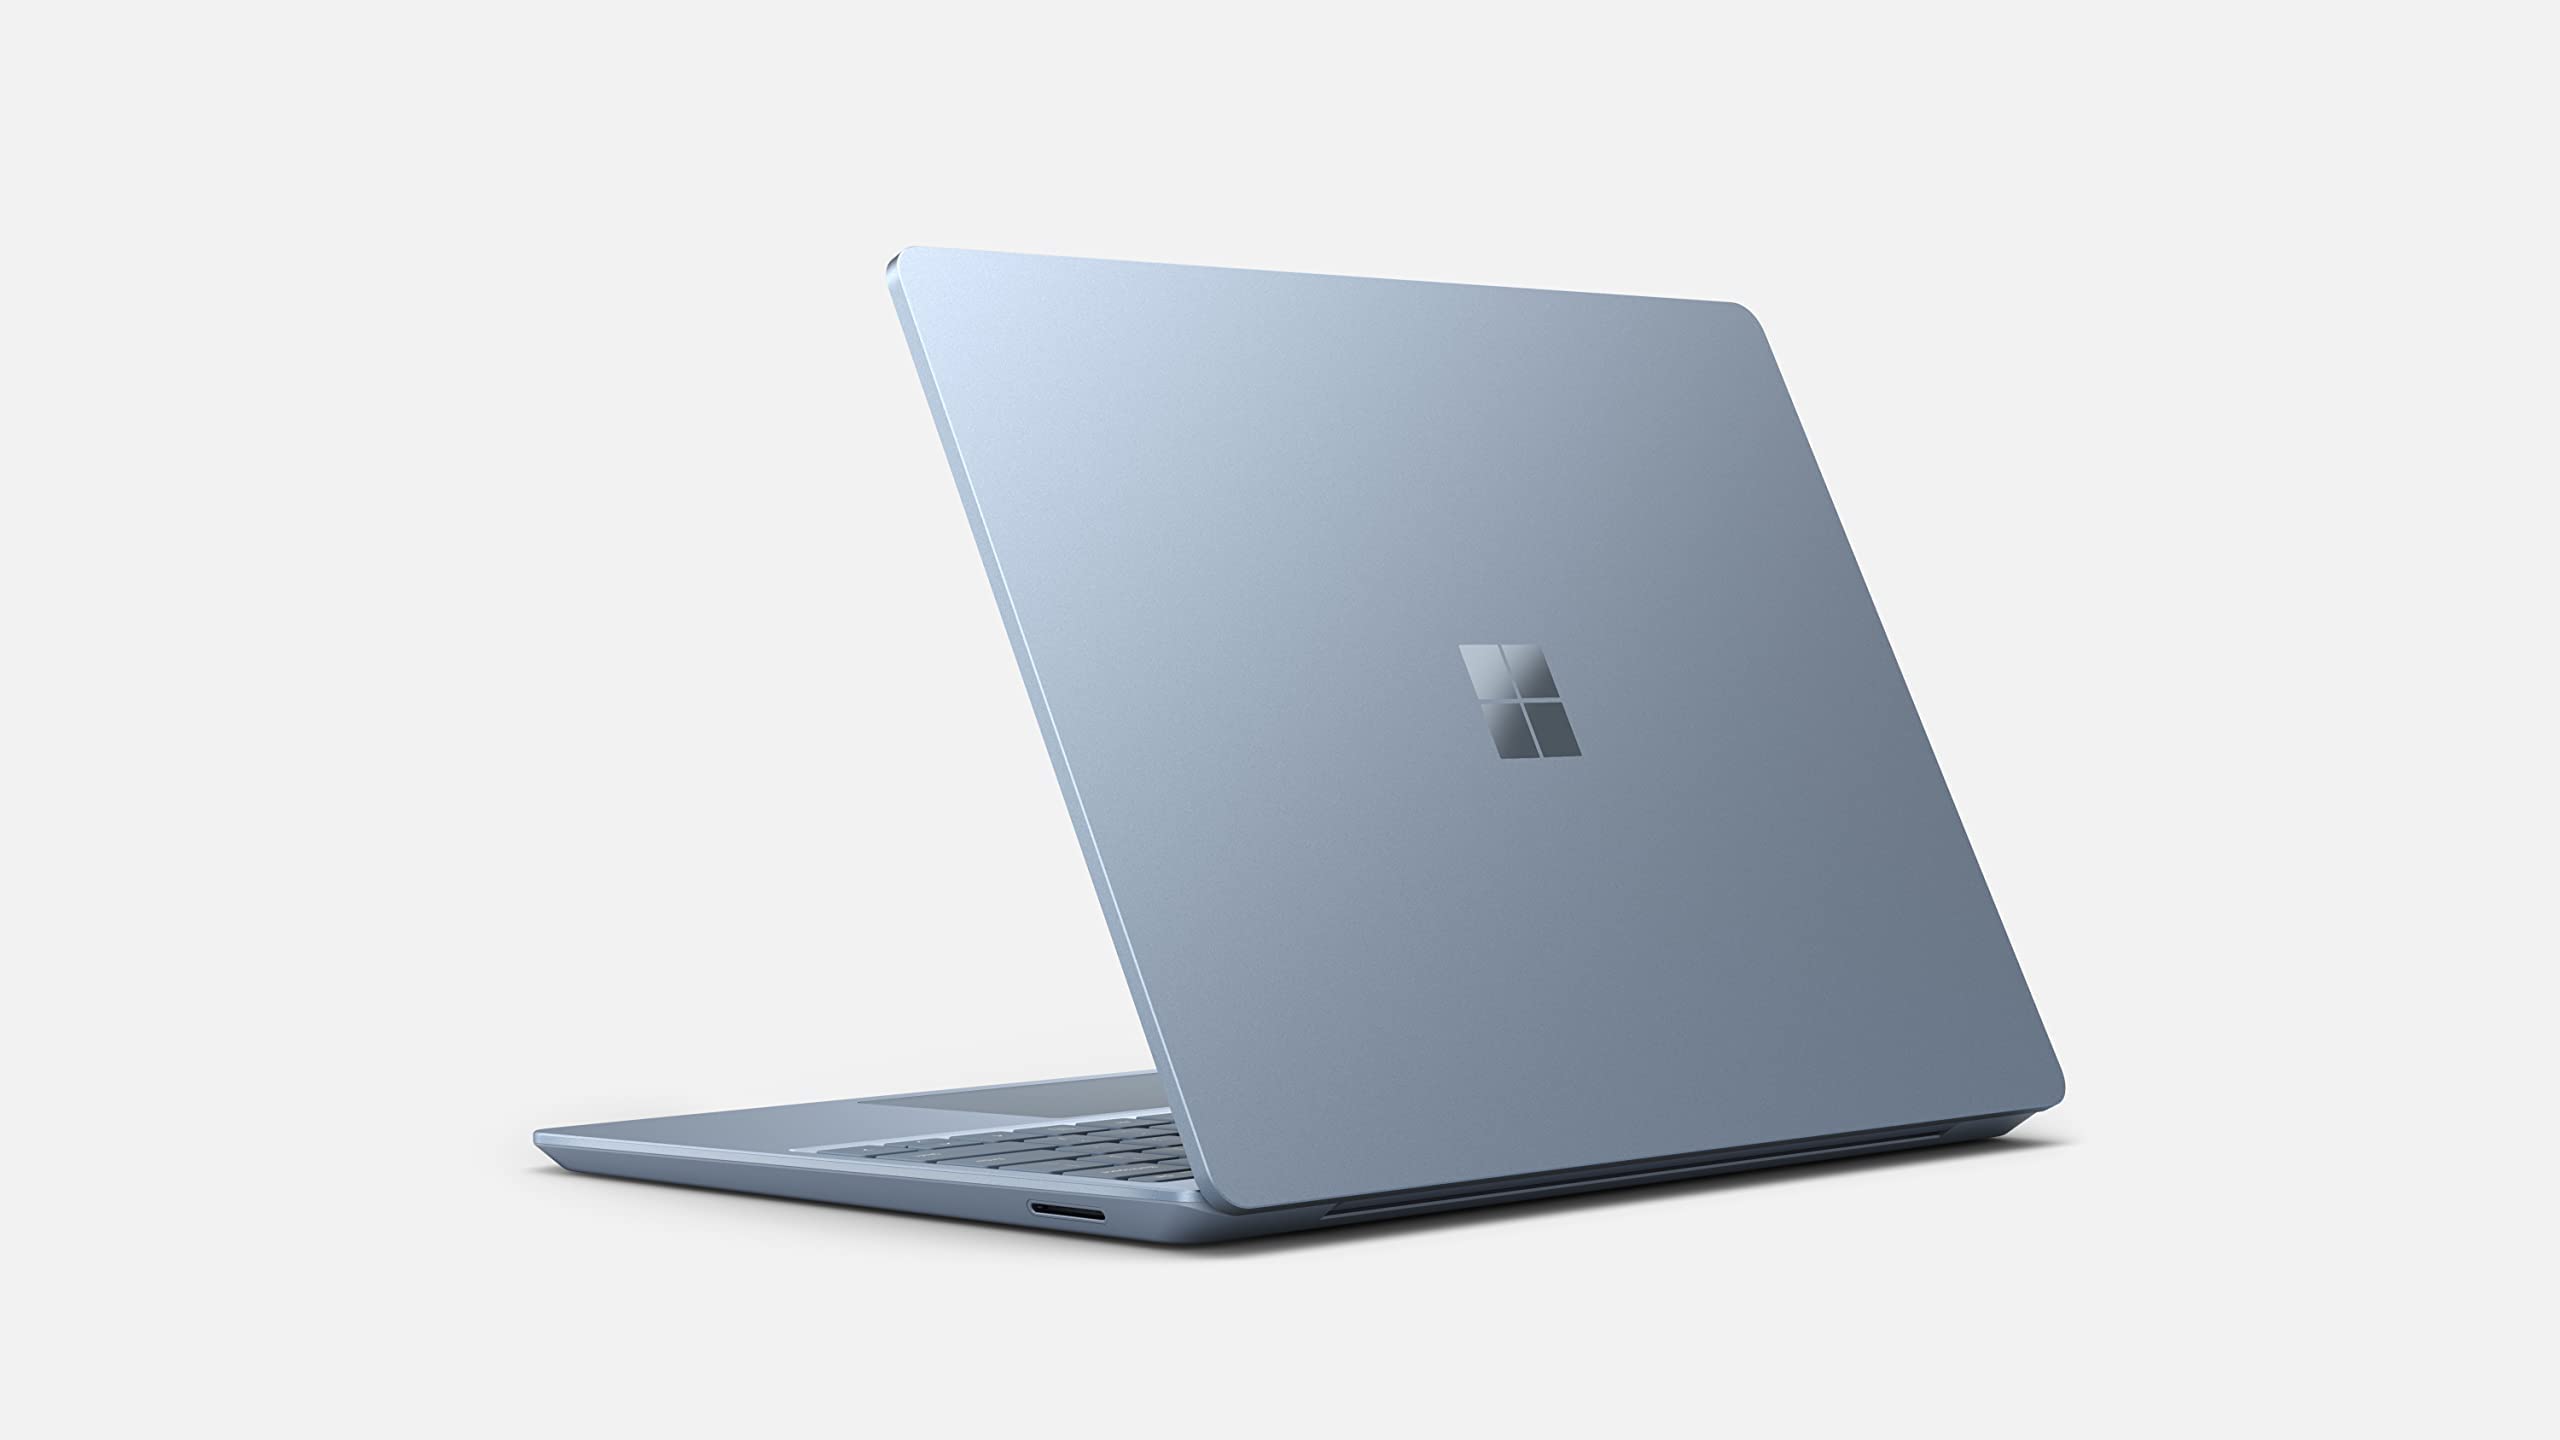 Microsoft Surface Laptop Go - 12.4